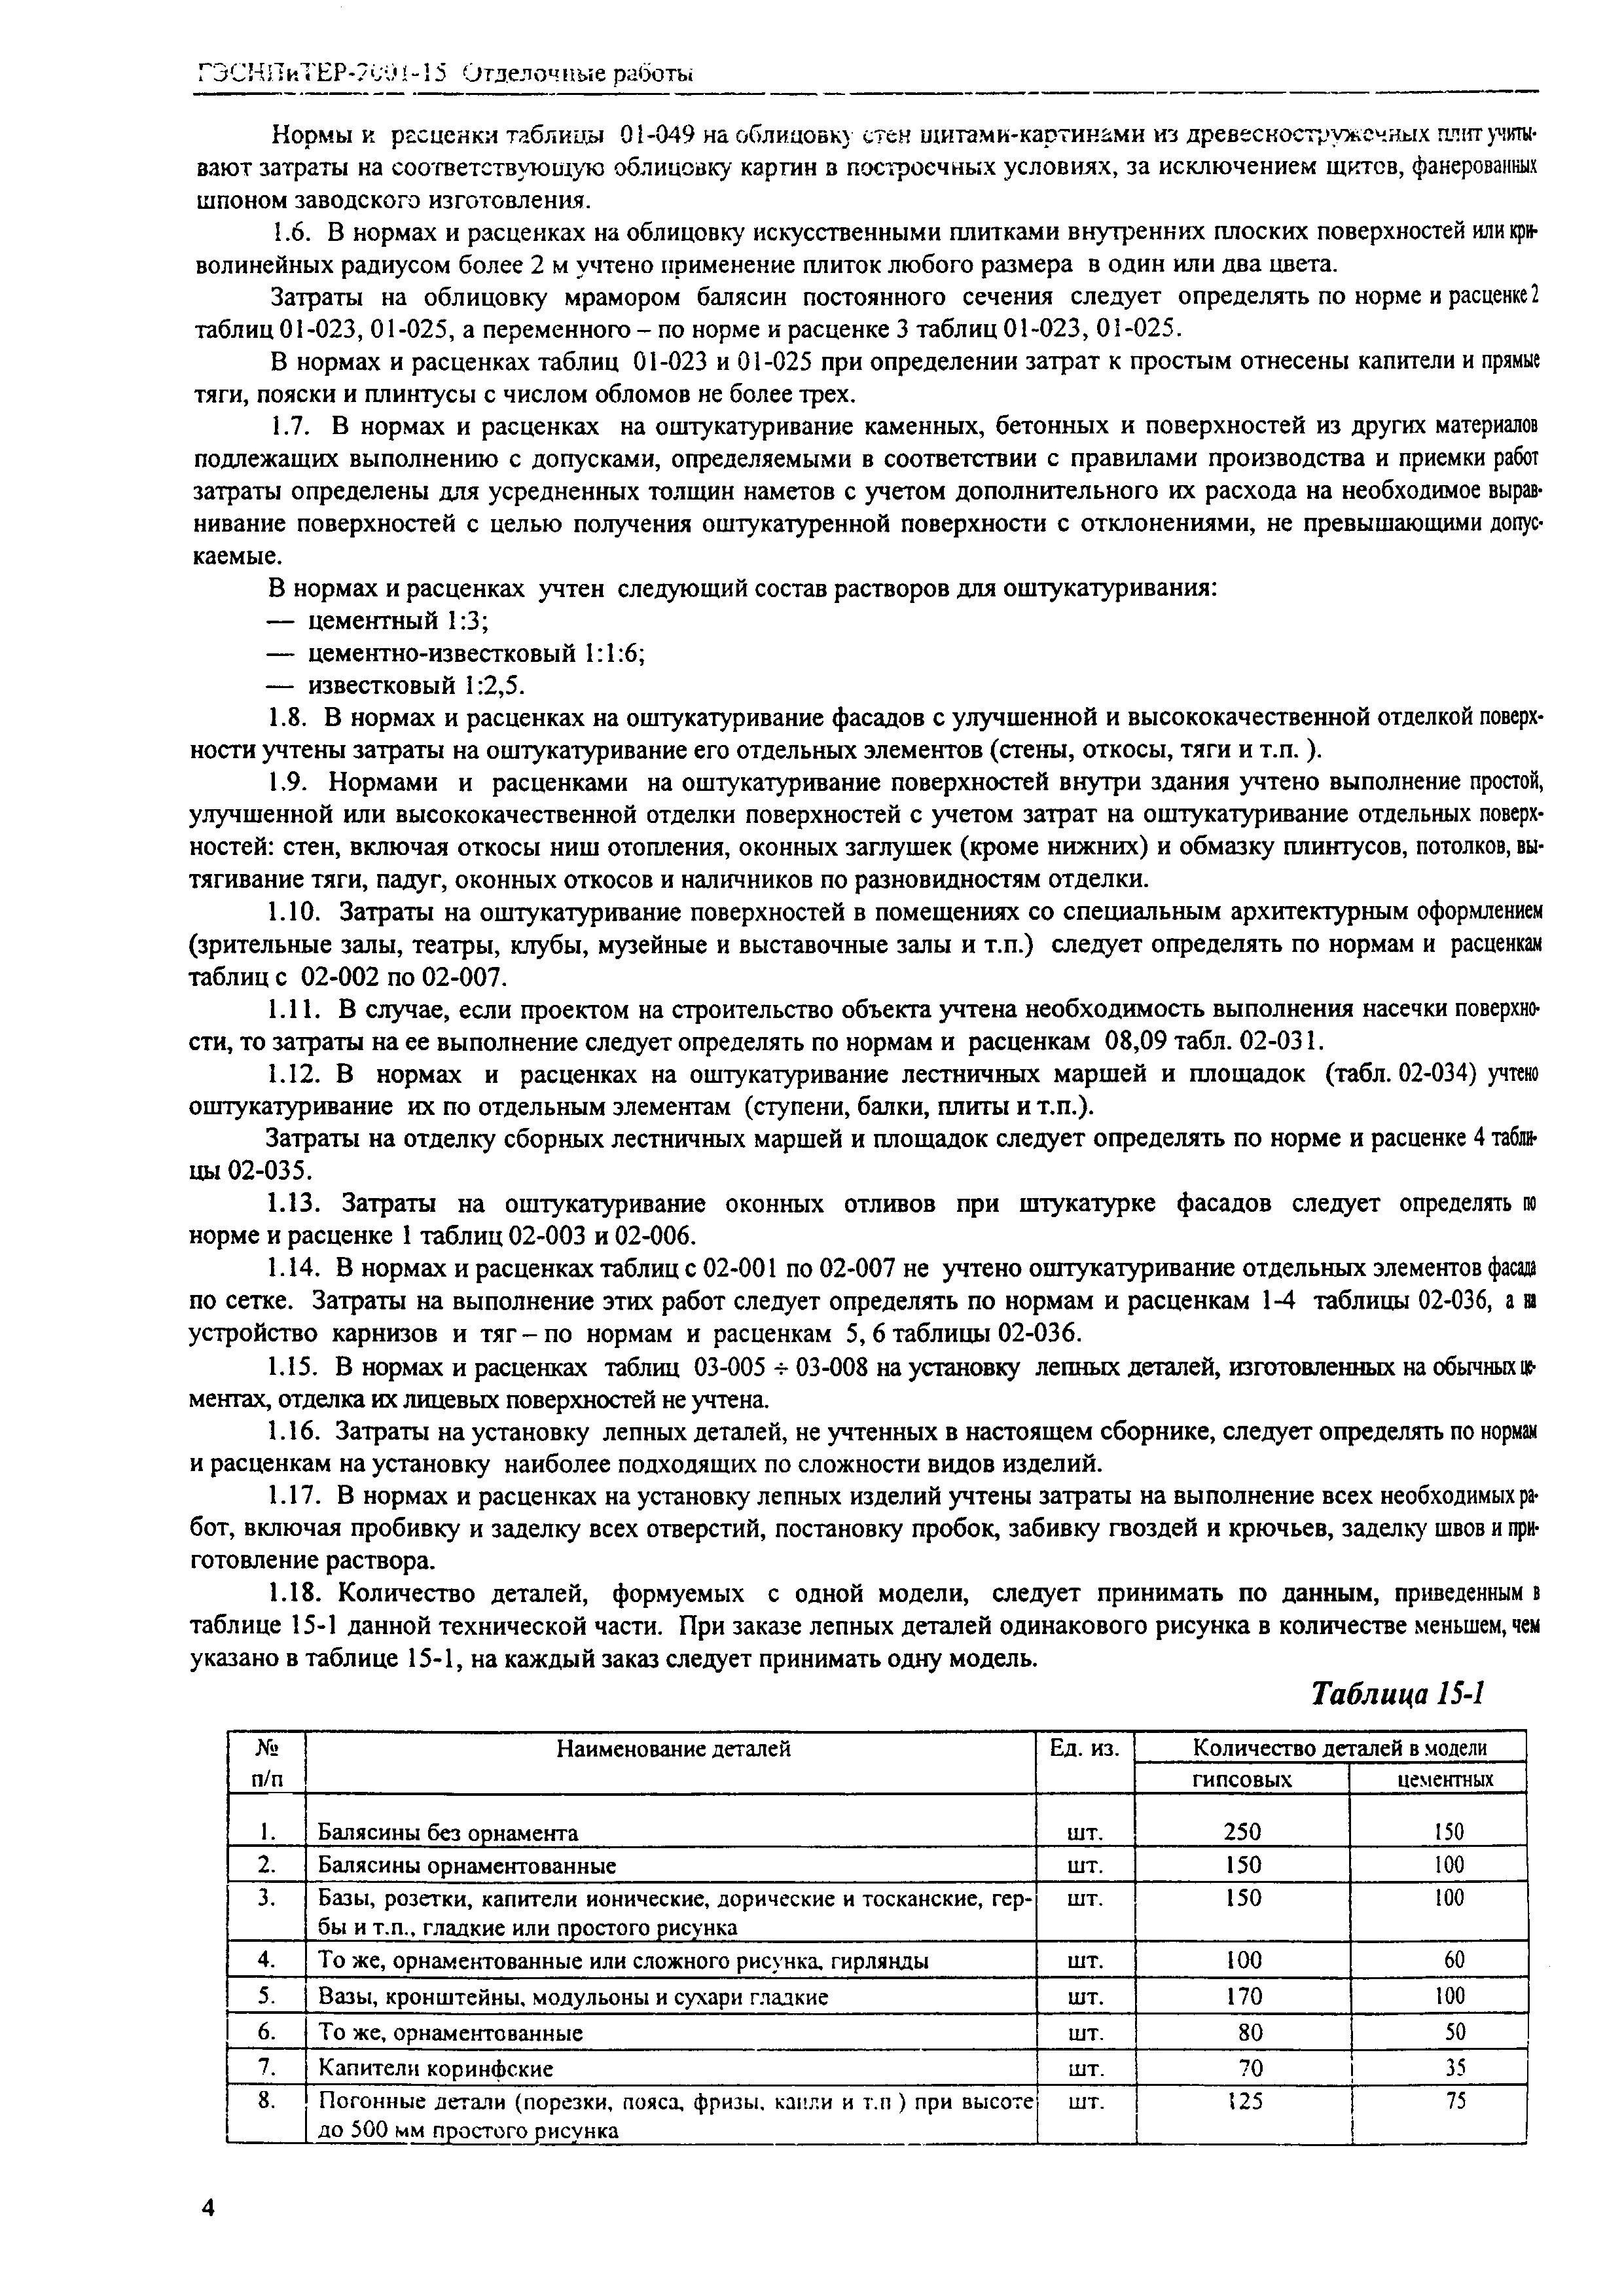 ГЭСНПиТЕР 2001-15 (III)